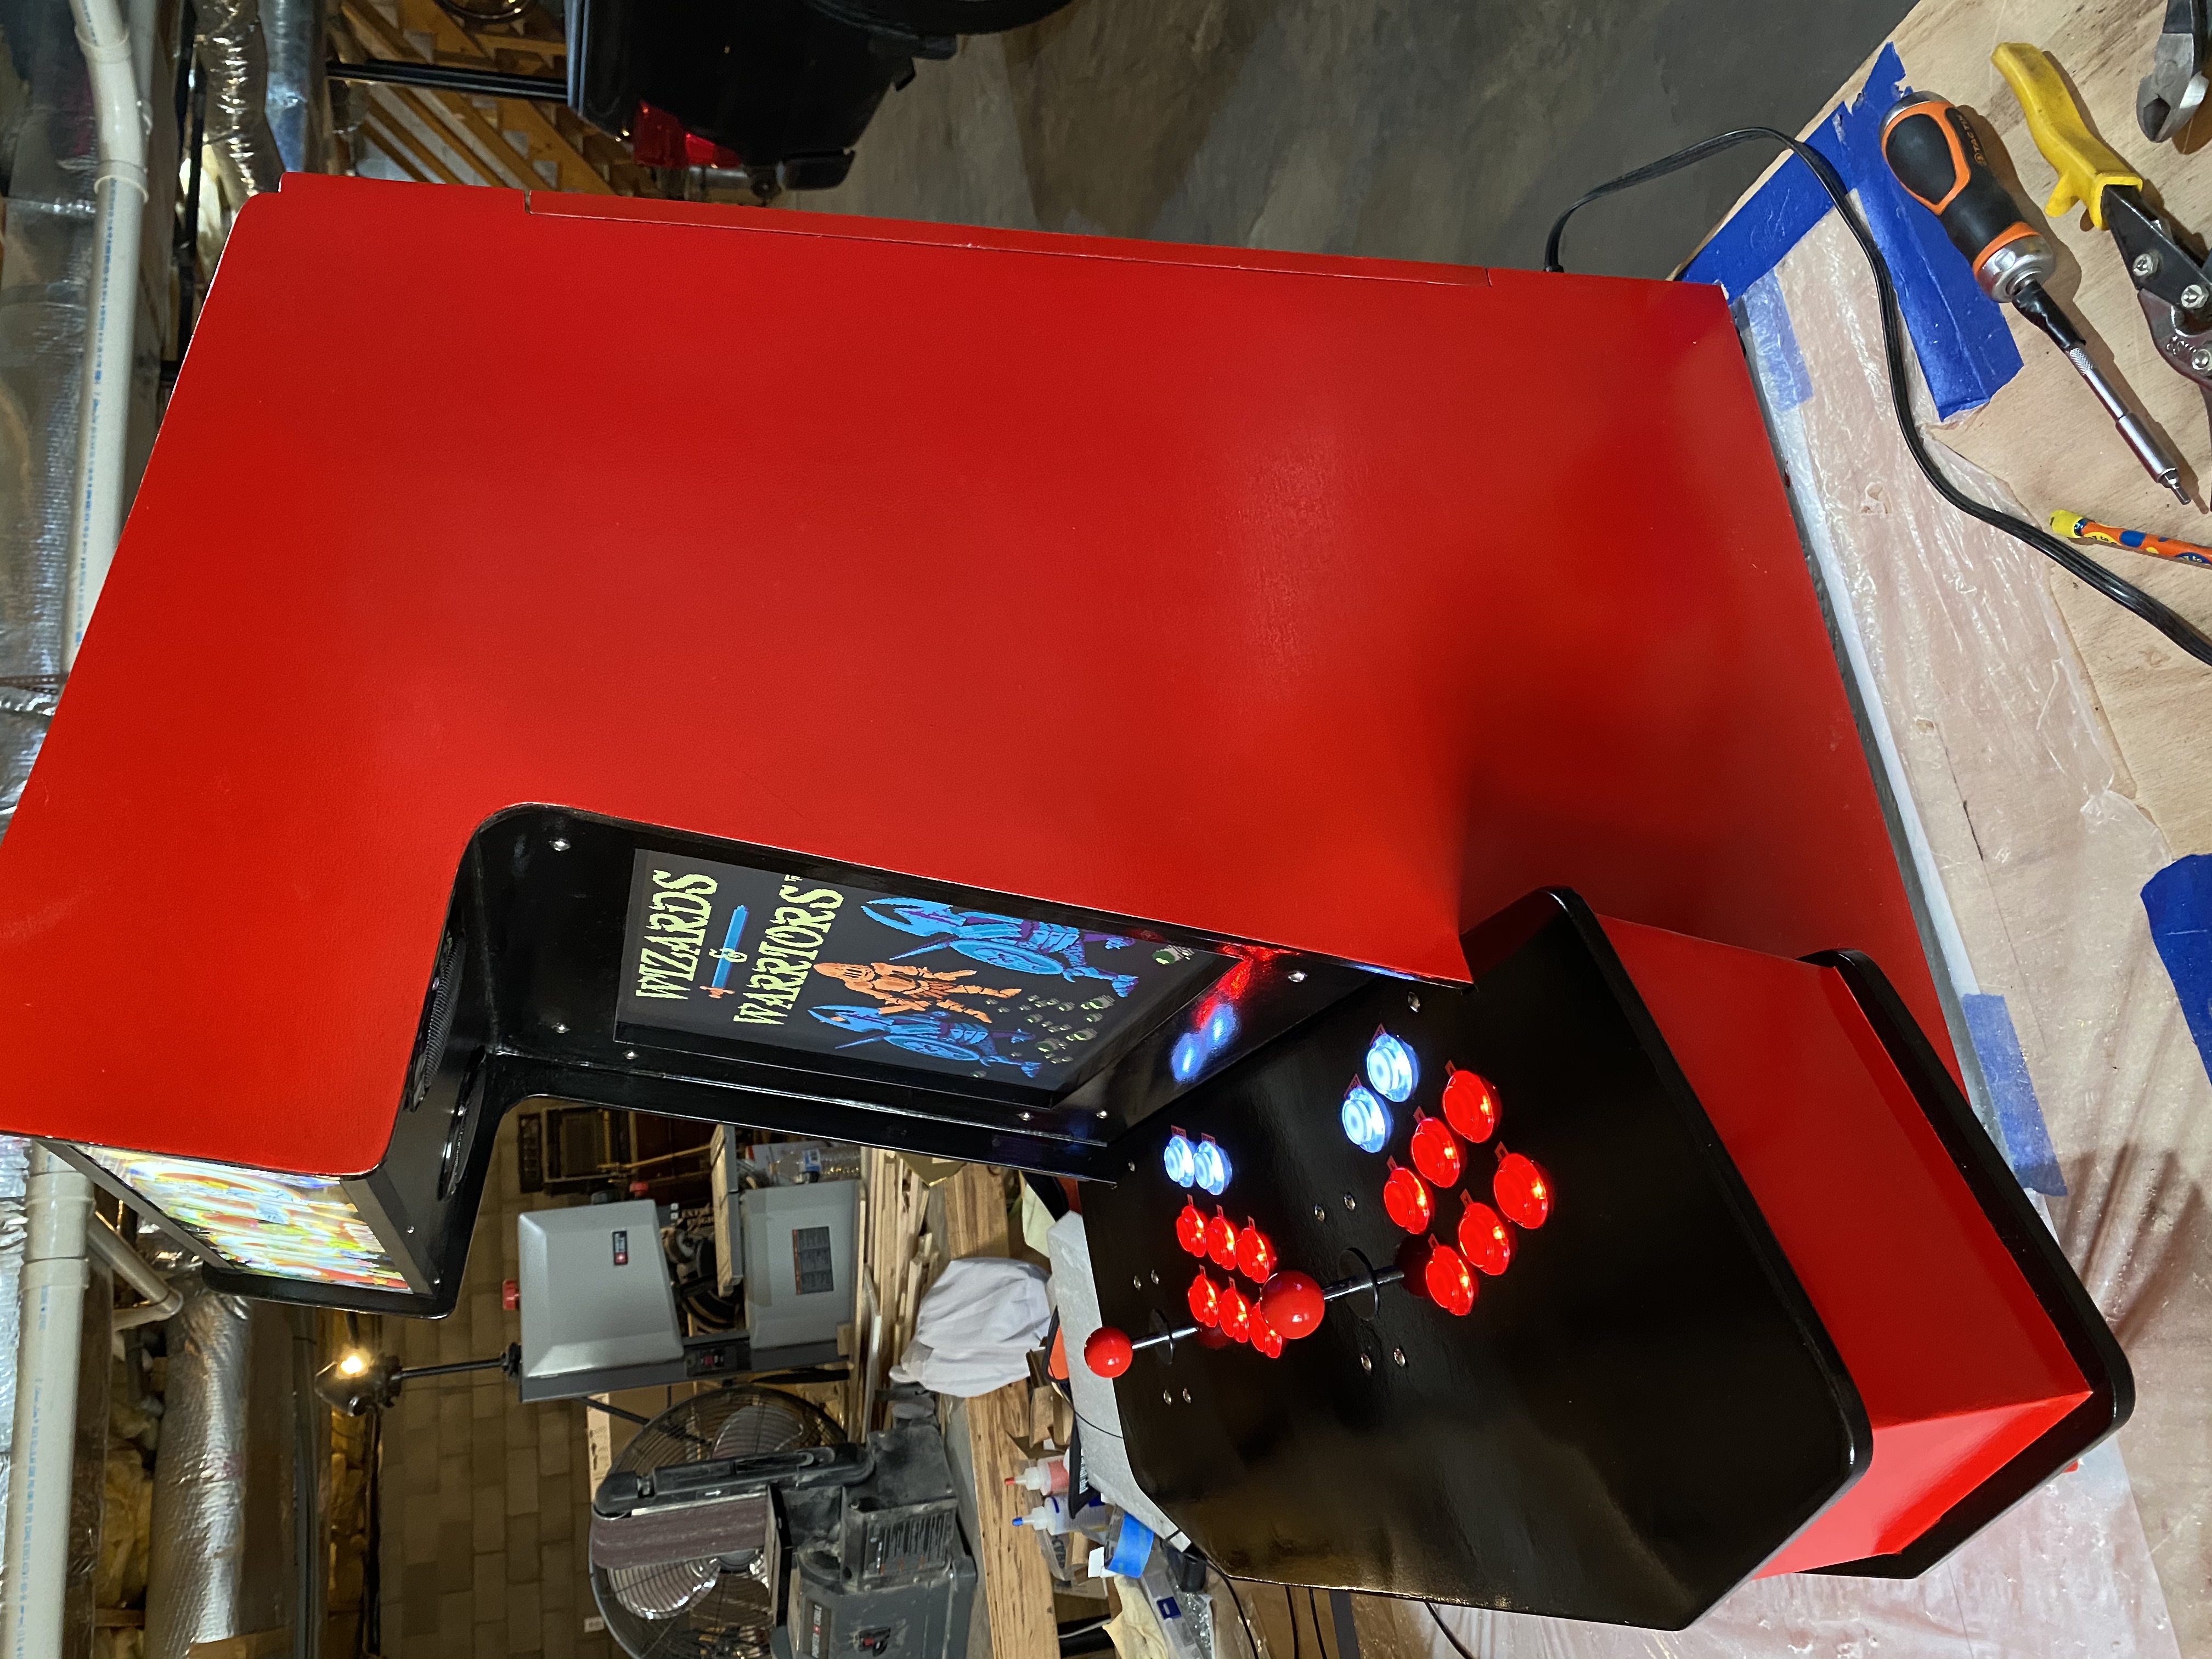 RetroPie Arcade Right Side View